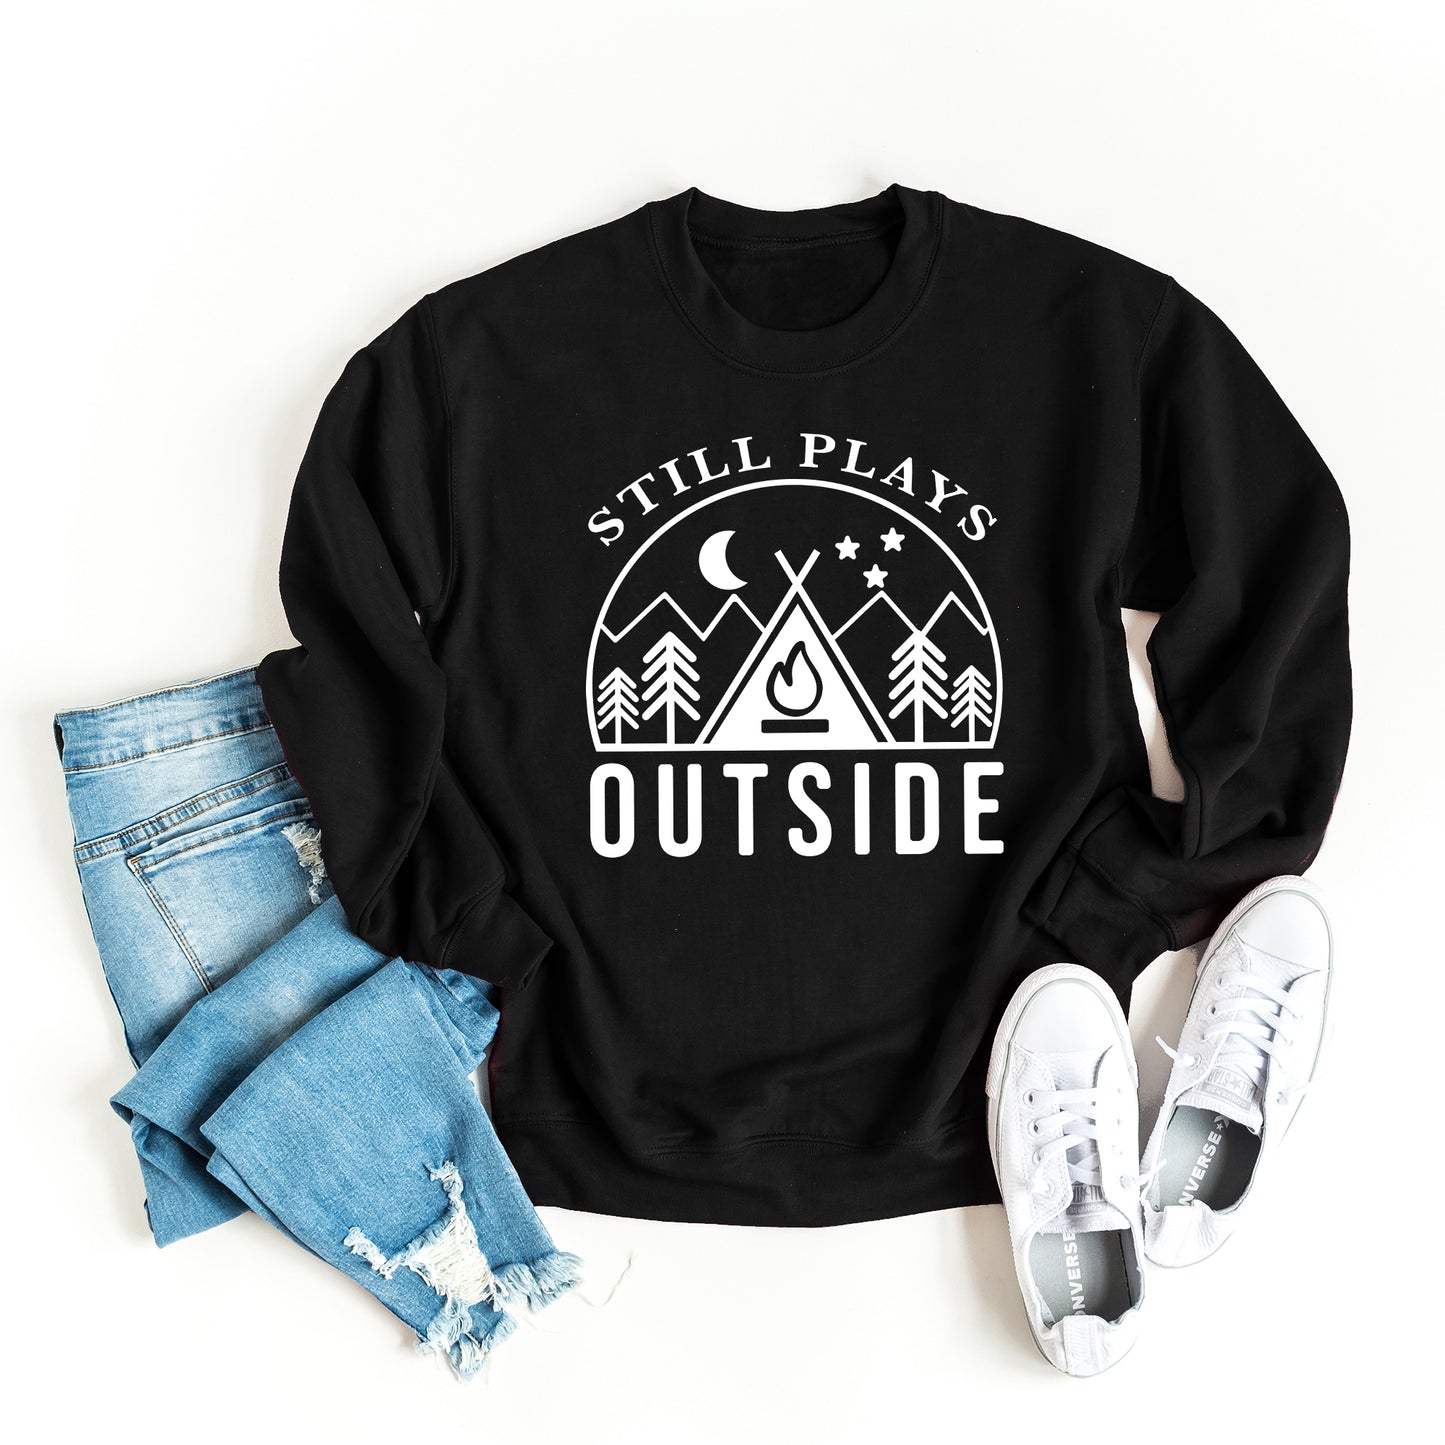 Still Plays Outside | Sweatshirt